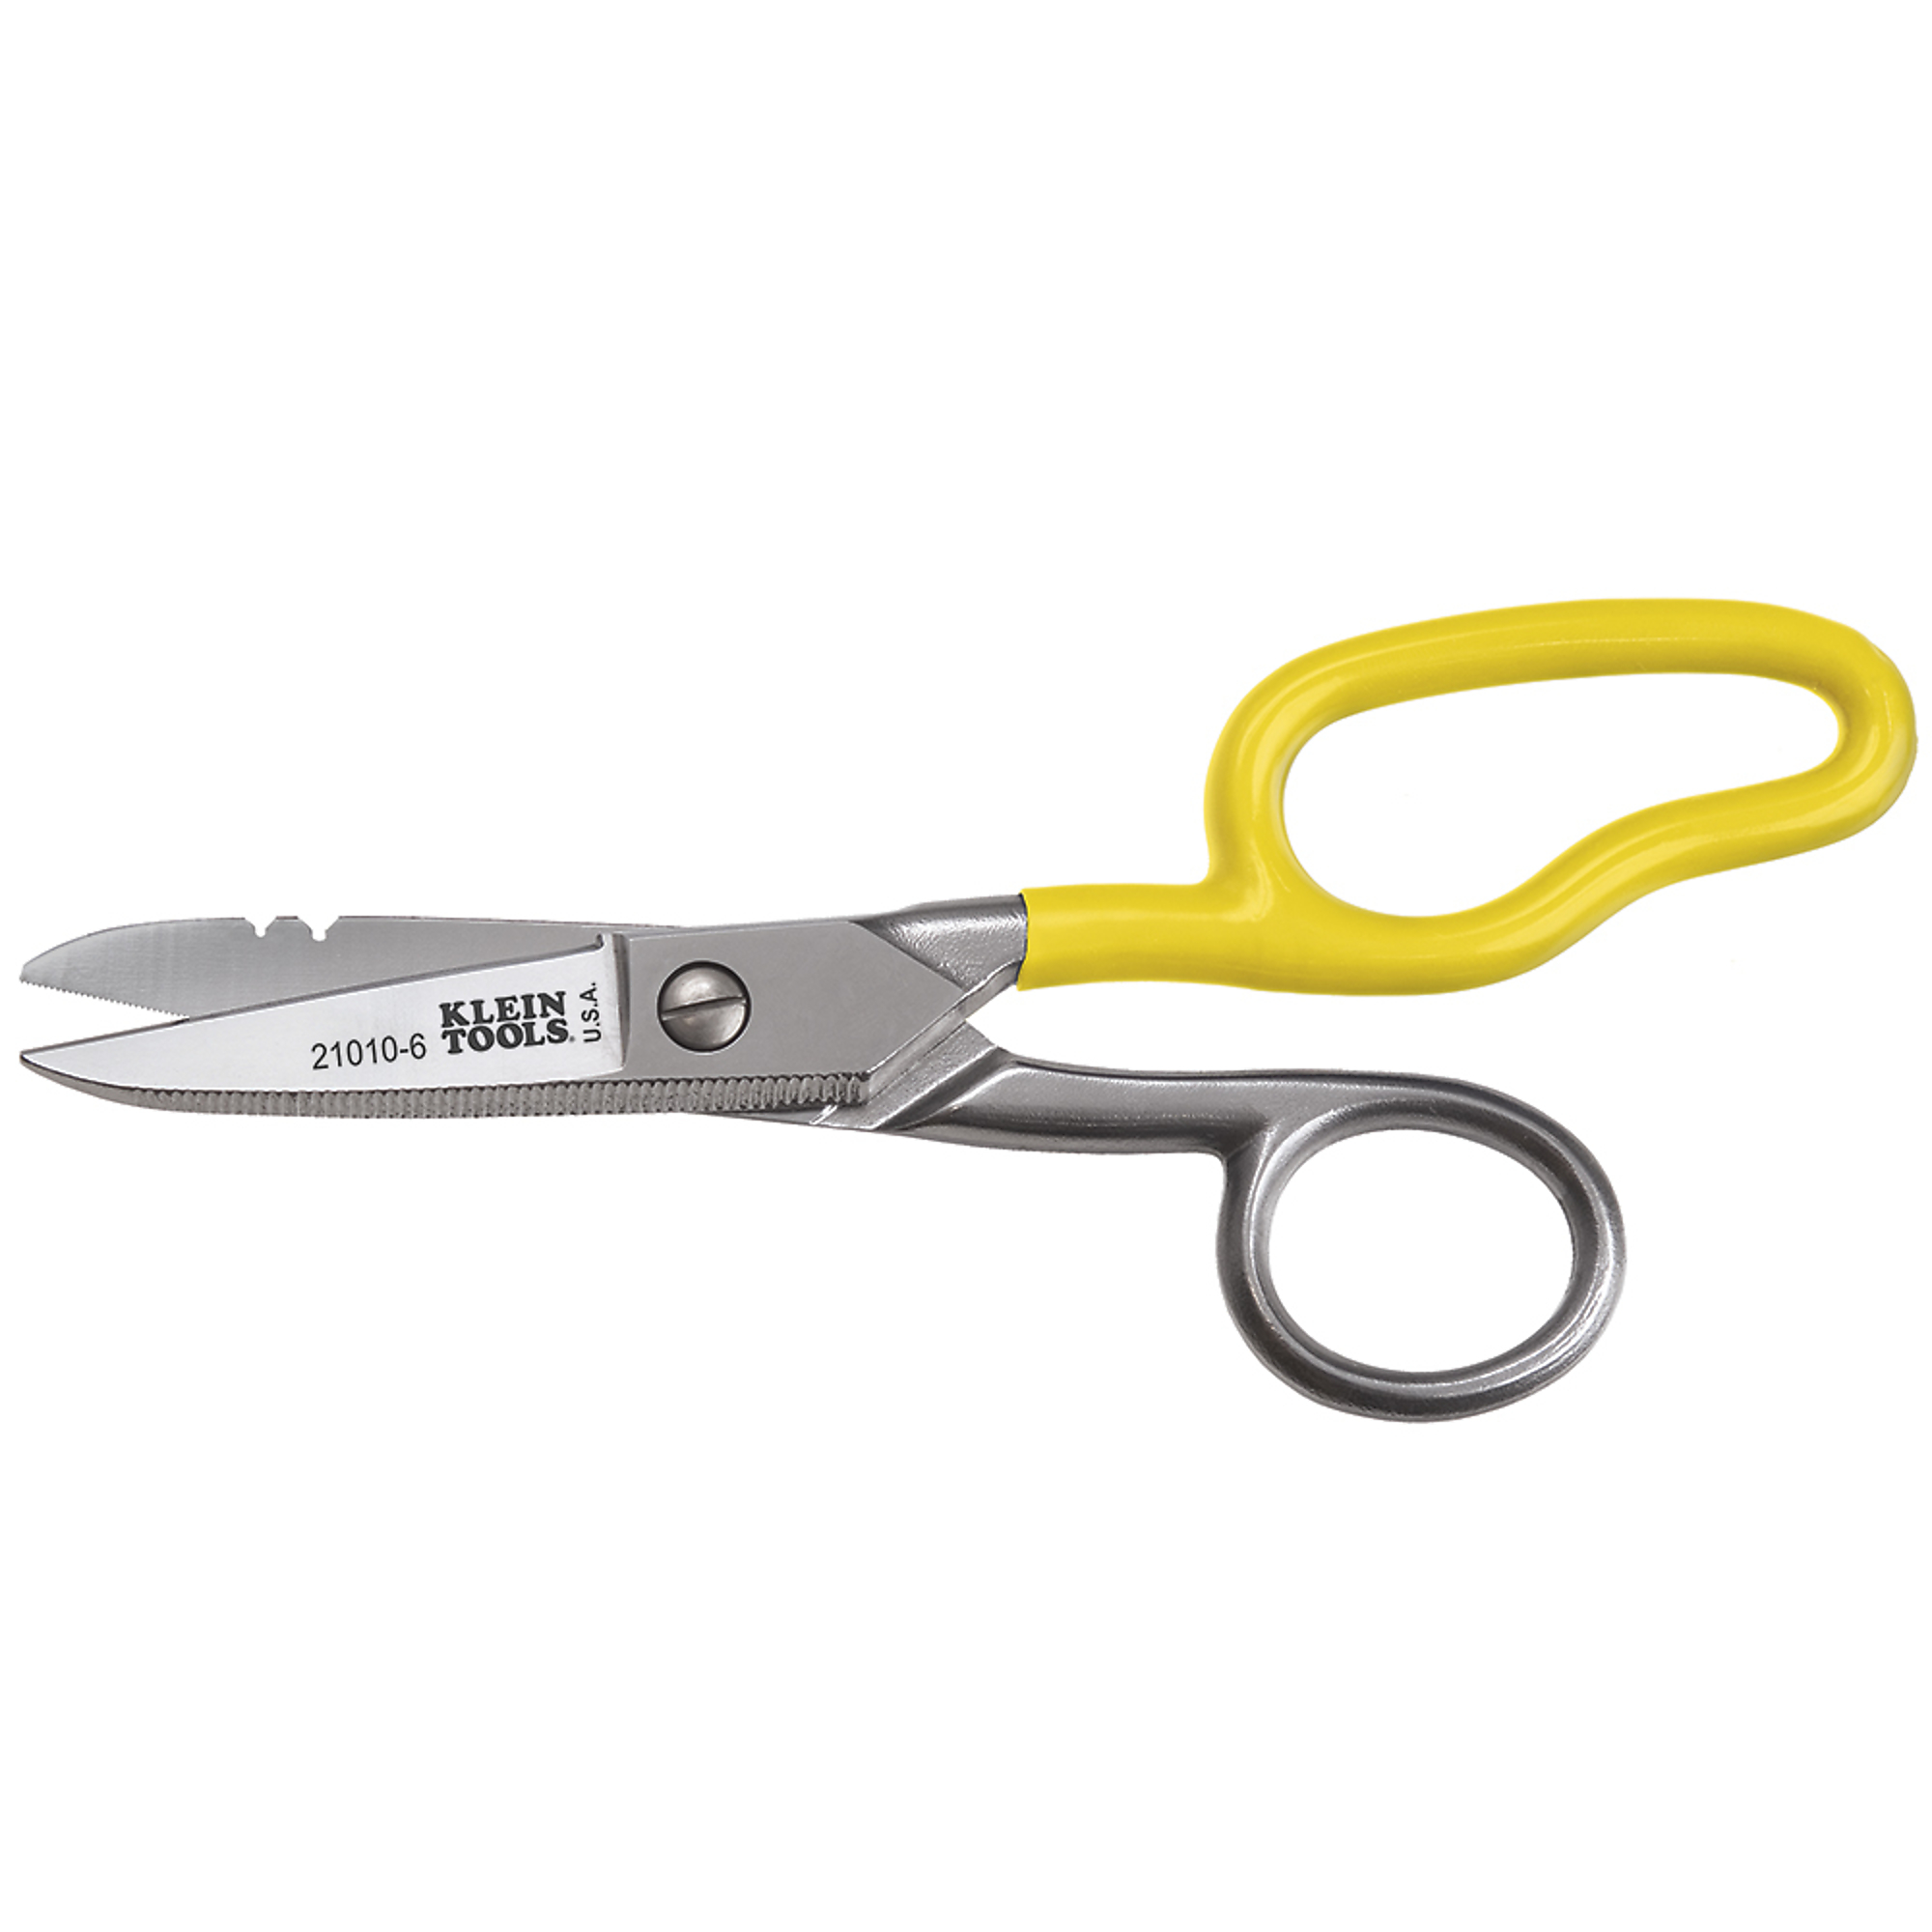 Klein Tools, Free-Fall Snip, Scraper, File, Serrated Blades, Blade Size 1.88 in, Tool Length 6.25 in, Model 21010-6-SEN